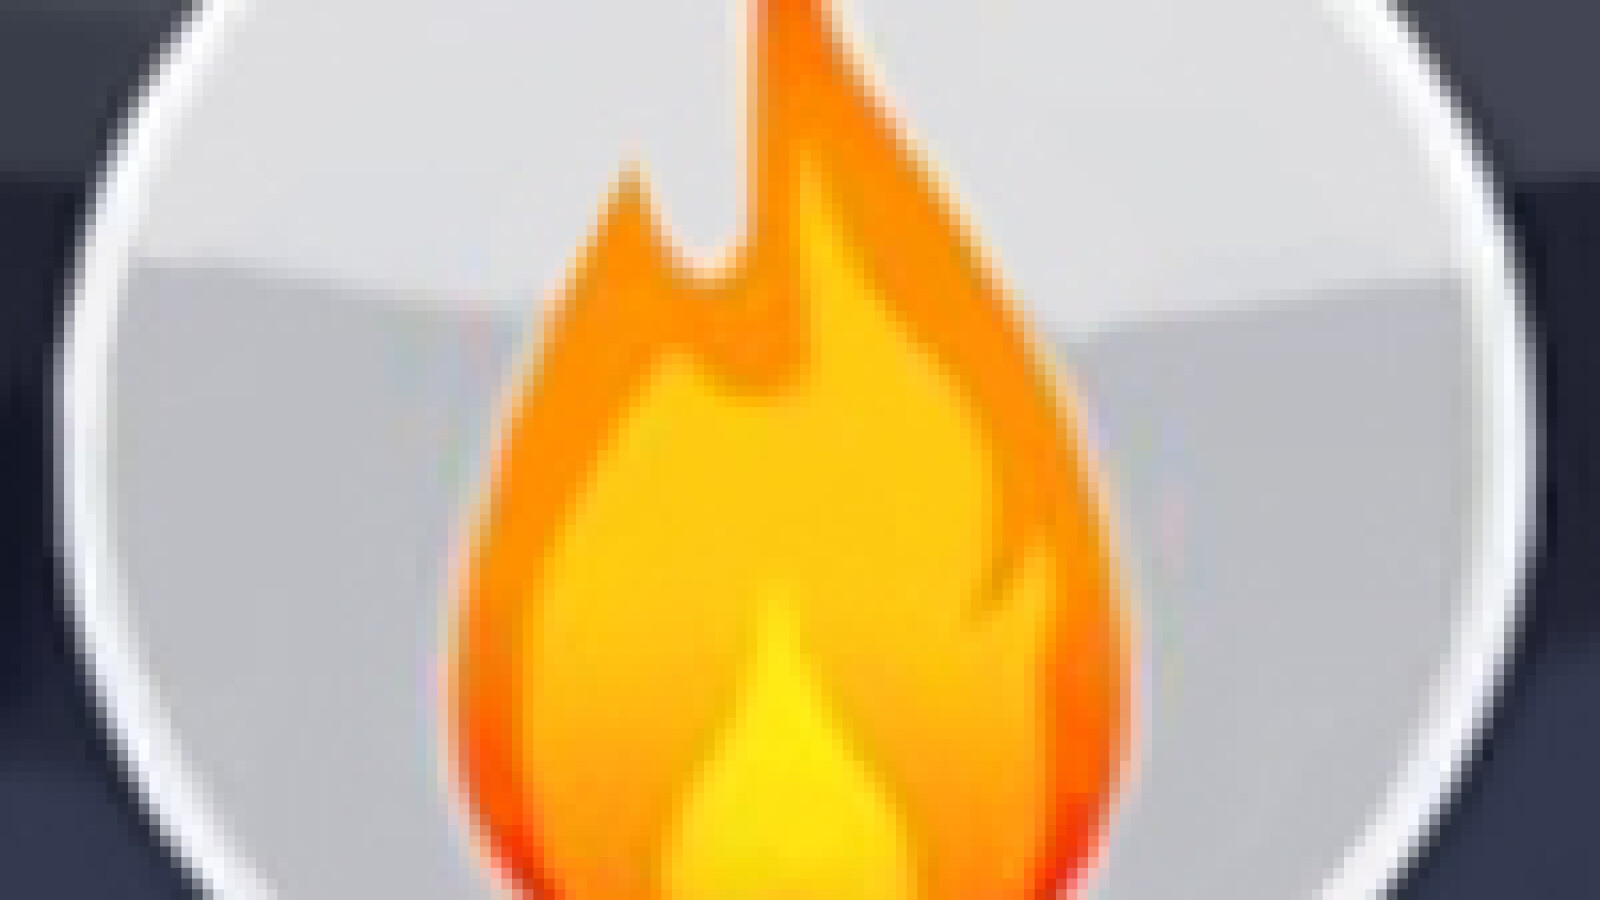 express burn disk burning software